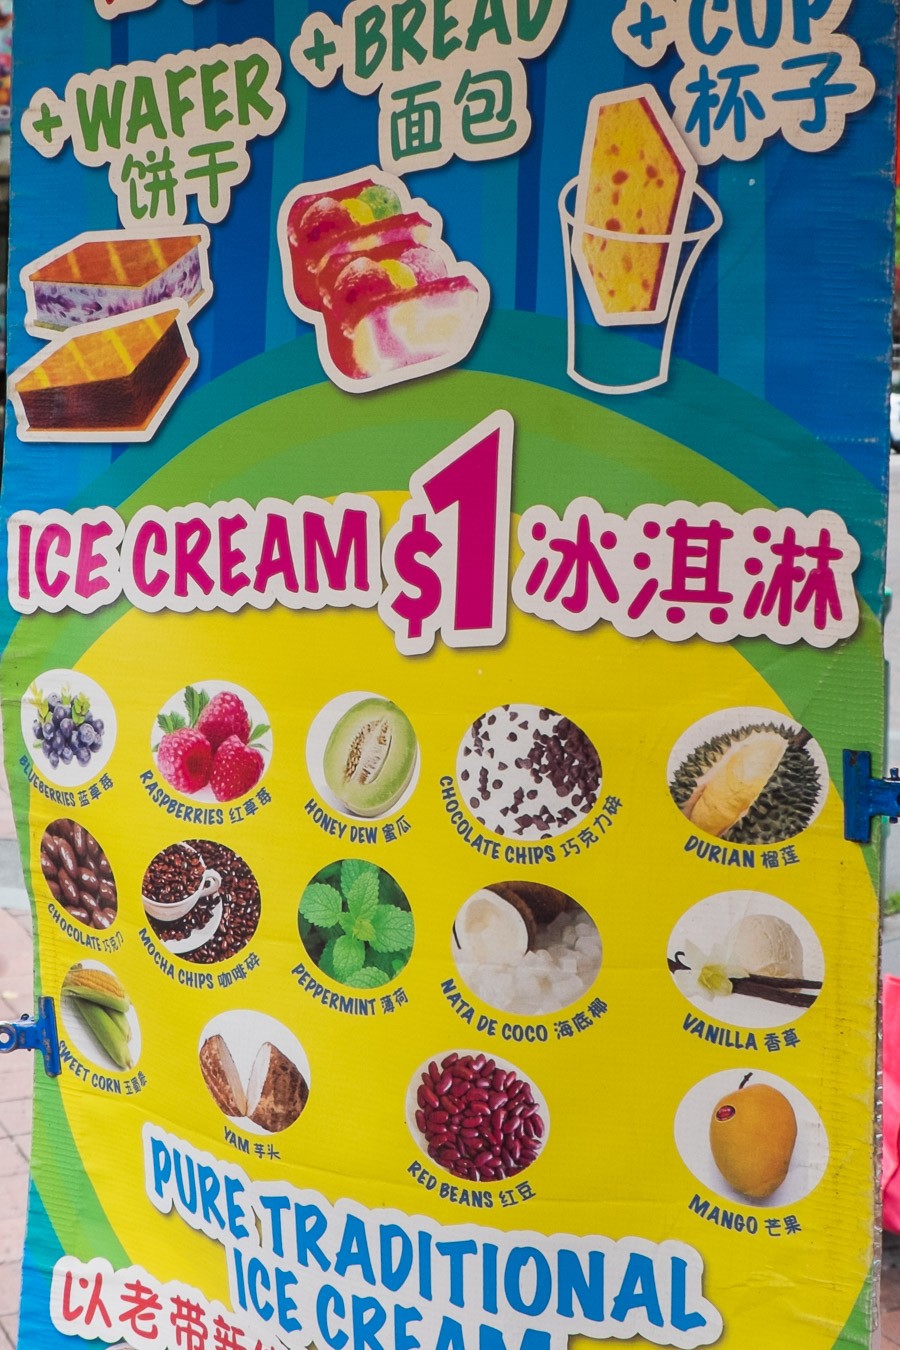 Singapore Culture - Dollar Ice Cream Sandwich Cart